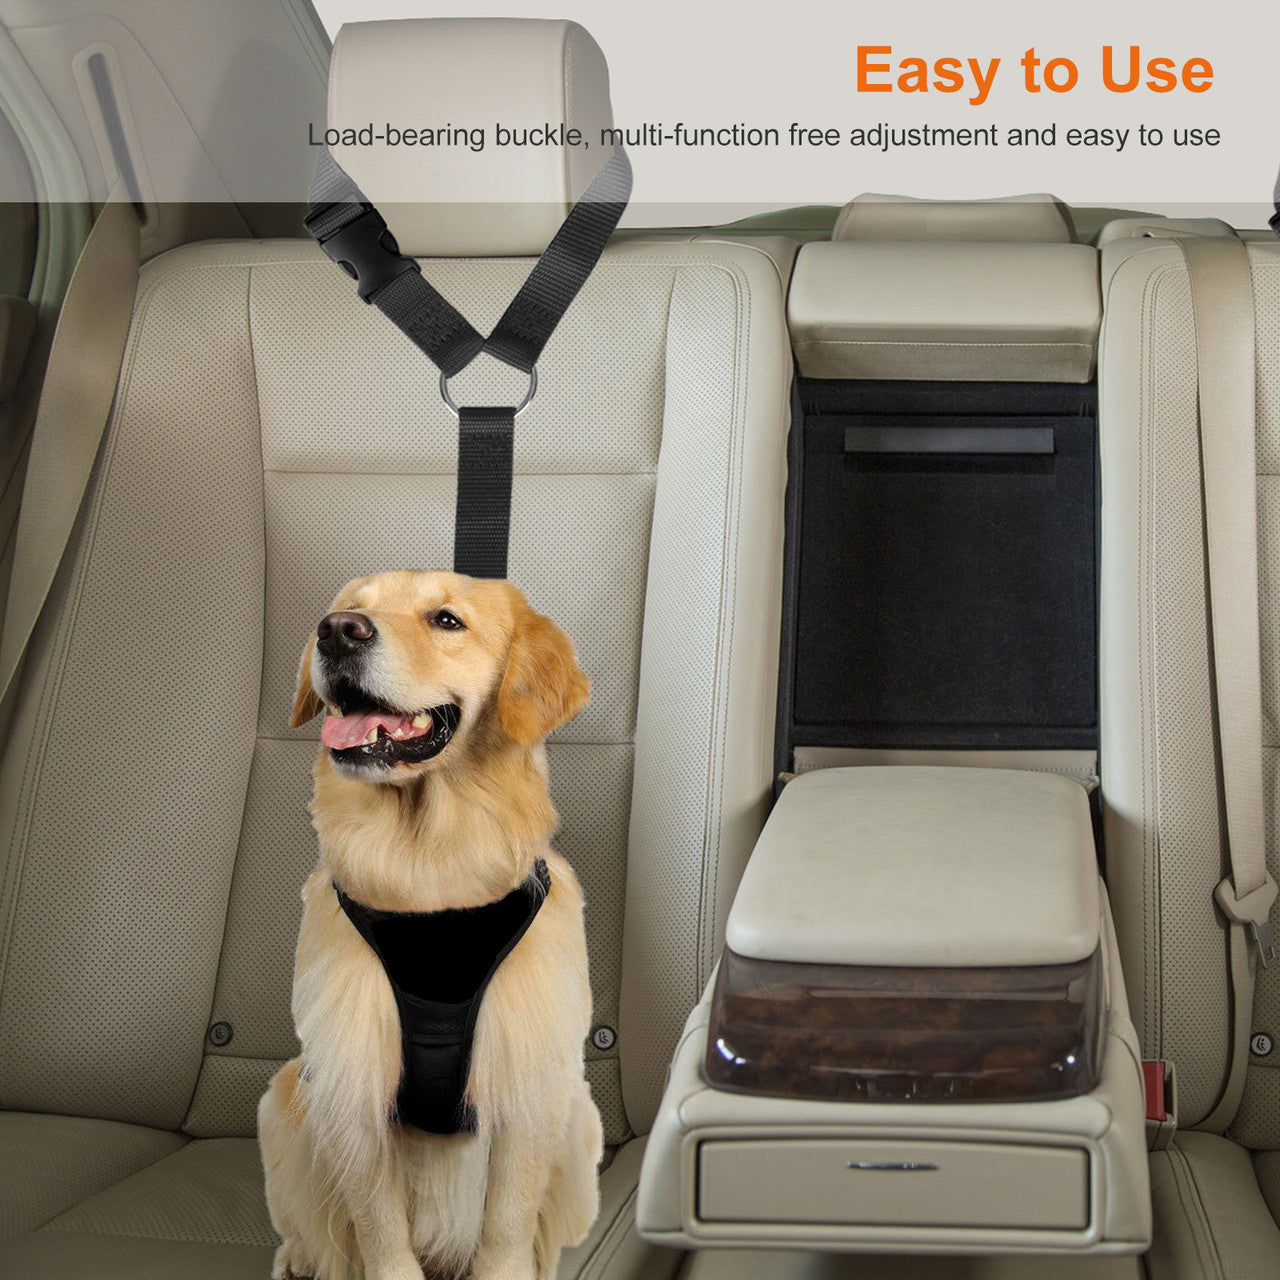 Dog Seat Belt Pet Dog Cat Car Seatbelt Safety Tether - Adjustable Harness Belts Pet Leash - Heavy Duty Nylon Seatbelts - Universal Fit Cars Truck SUV, Black, 2 Pack